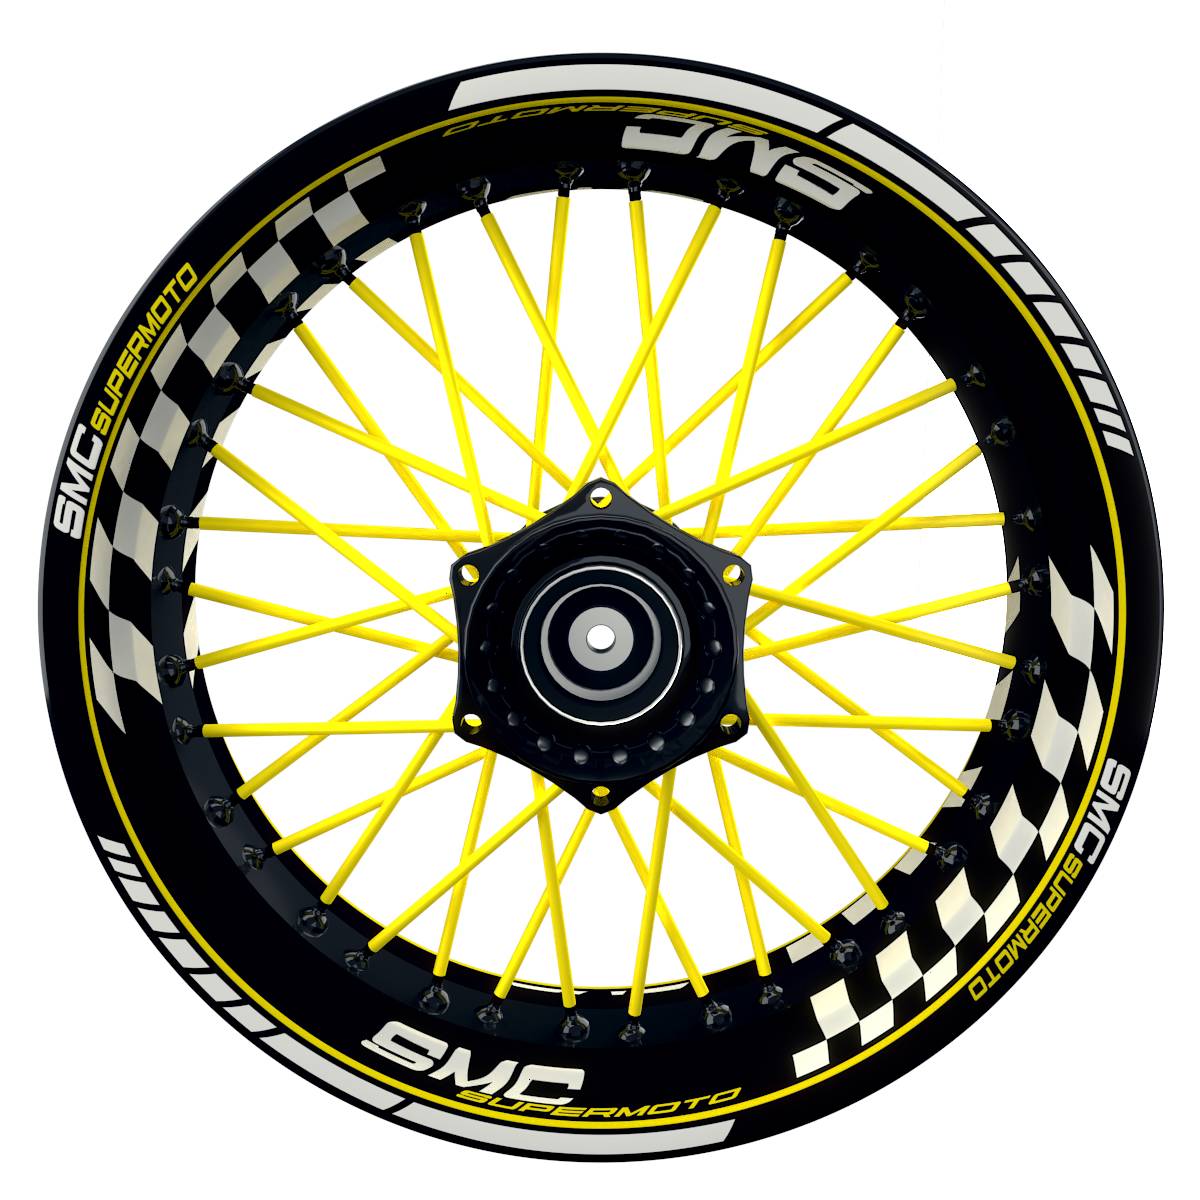 SMC Supermoto Grid schwarz gelb Wheelsticker Felgenaufkleber